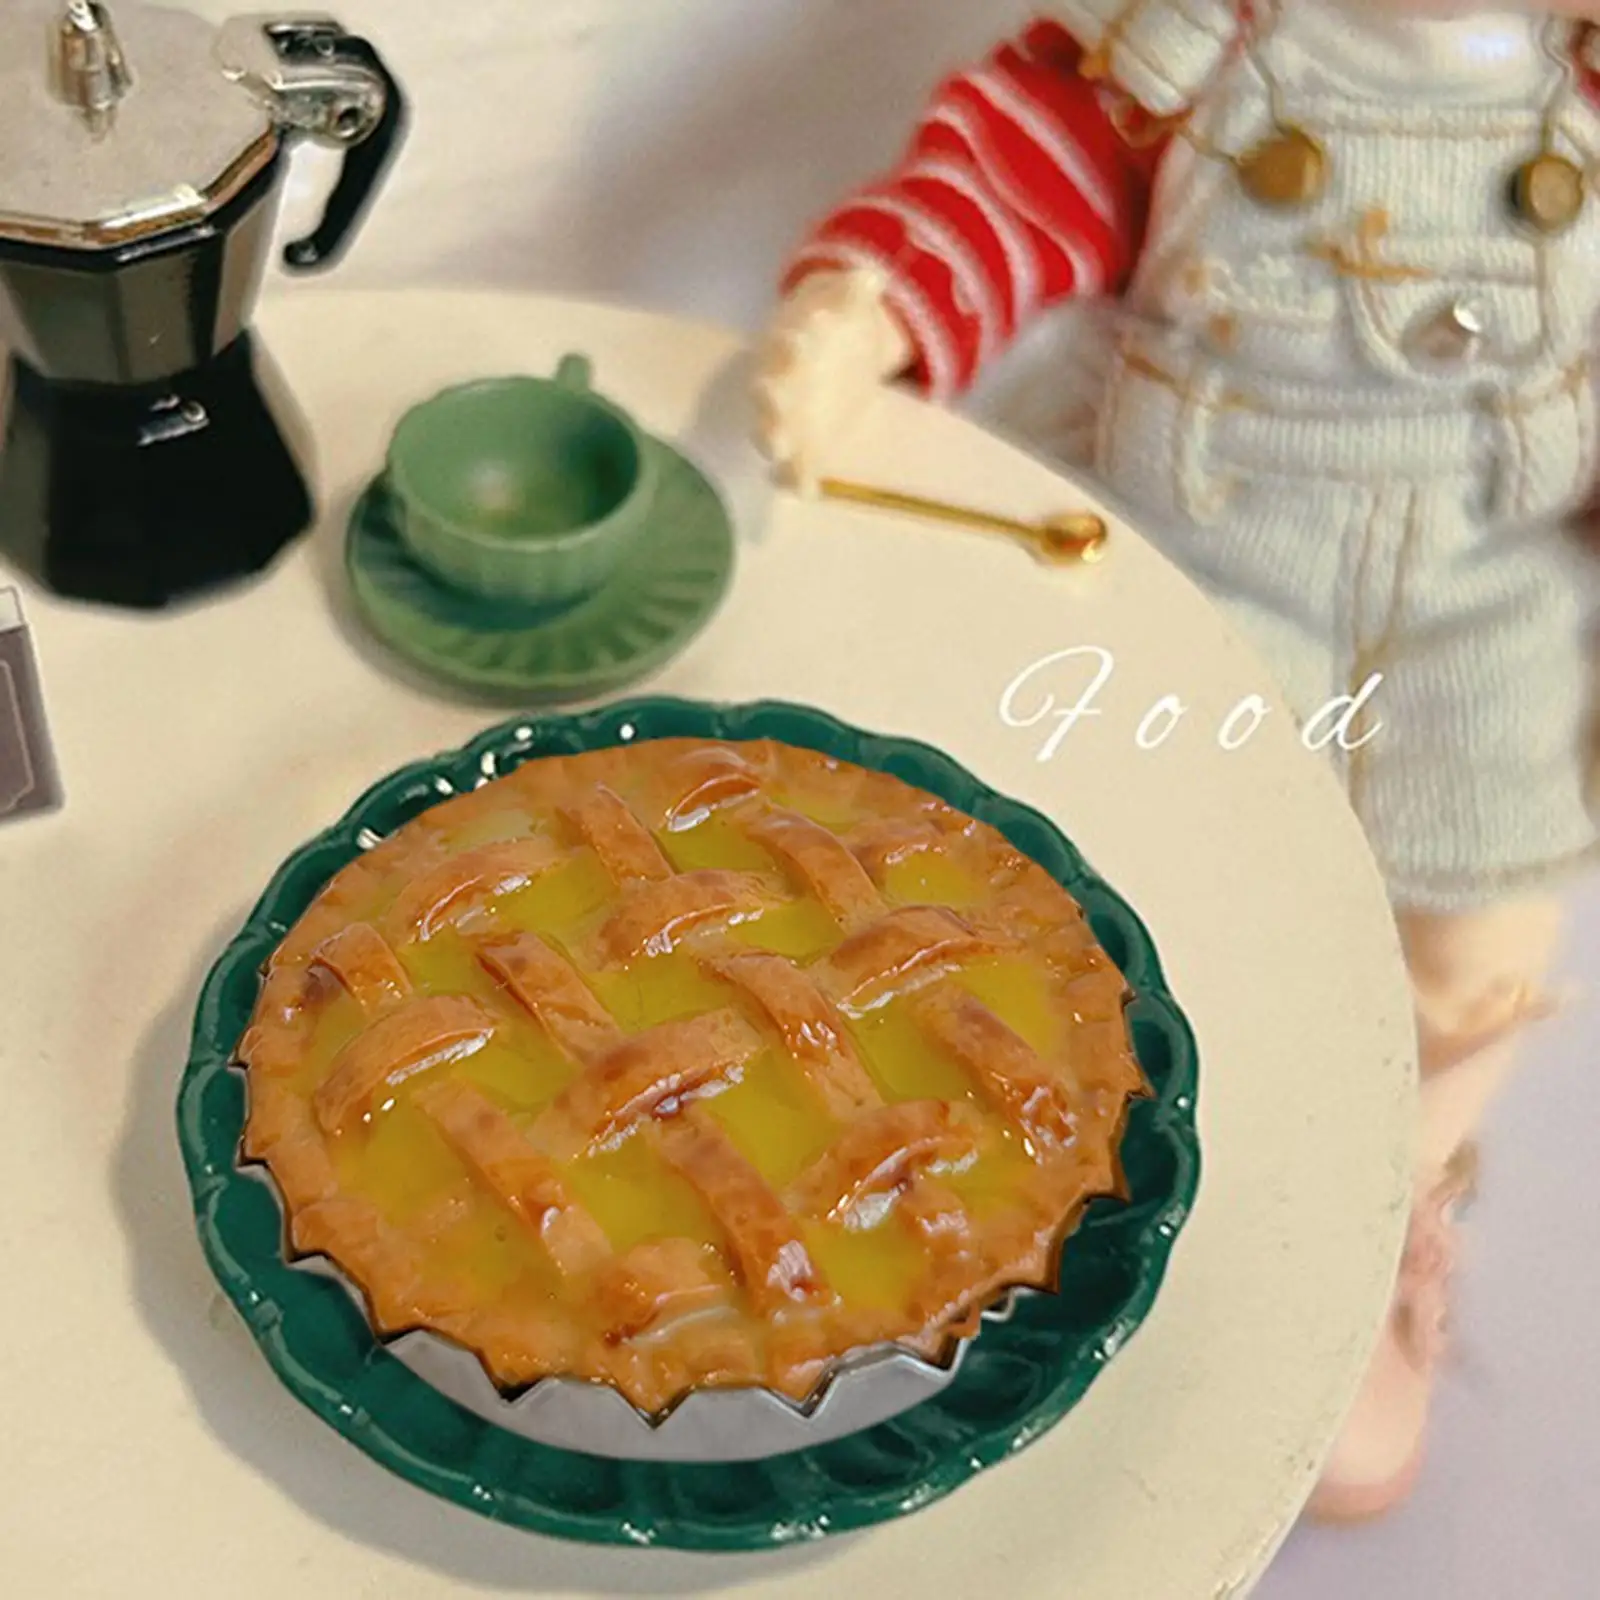 Miniature Scene Model, 1/6 1/12 Dollhouse Applepie Dessert Fruit Pie Model for 1:6 1:12 Scale